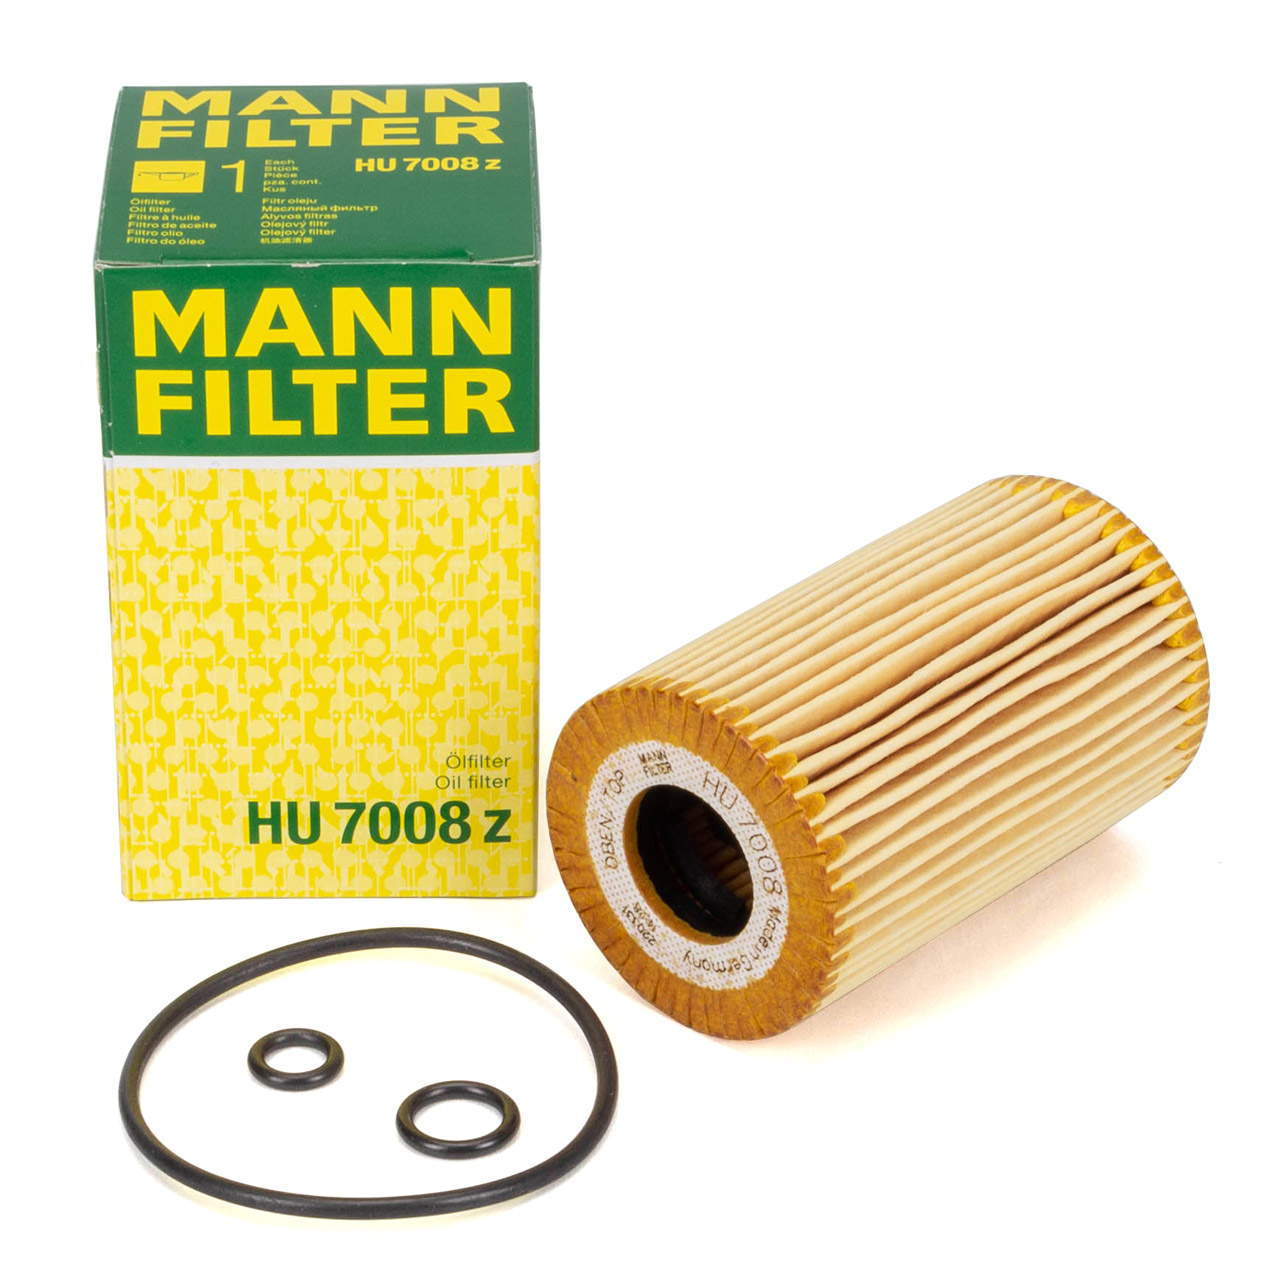 MANN-FILTER Ölfilter HU 7008 z Oil Filter